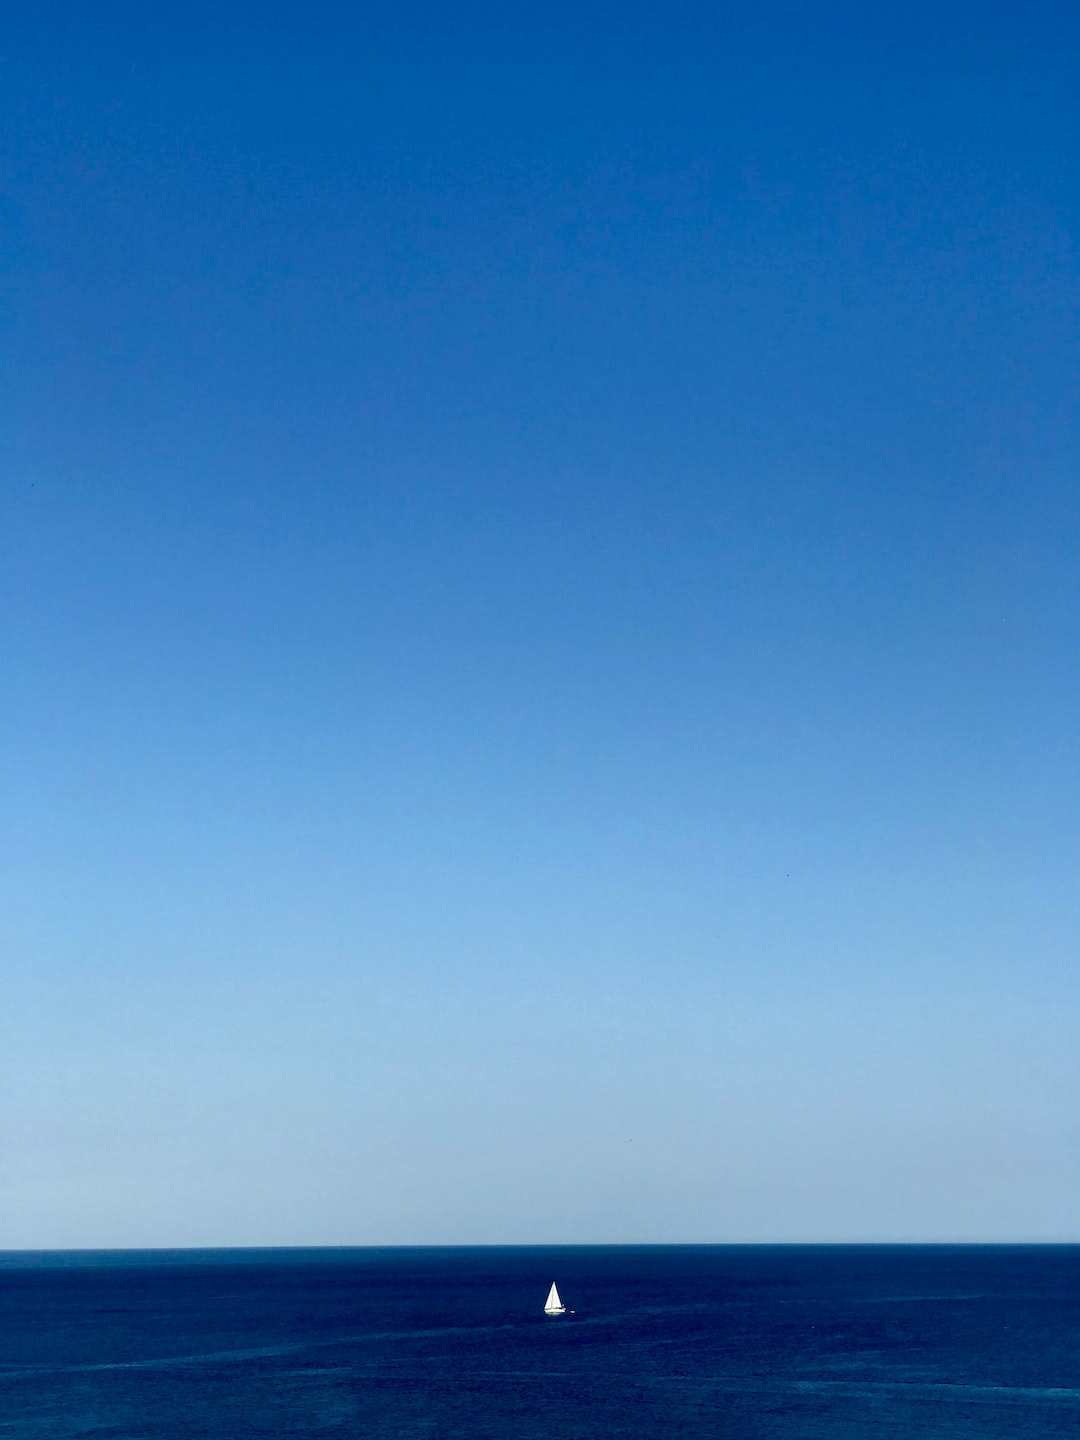 Sardinia summer, blue med sea, blue sky, white sail boat